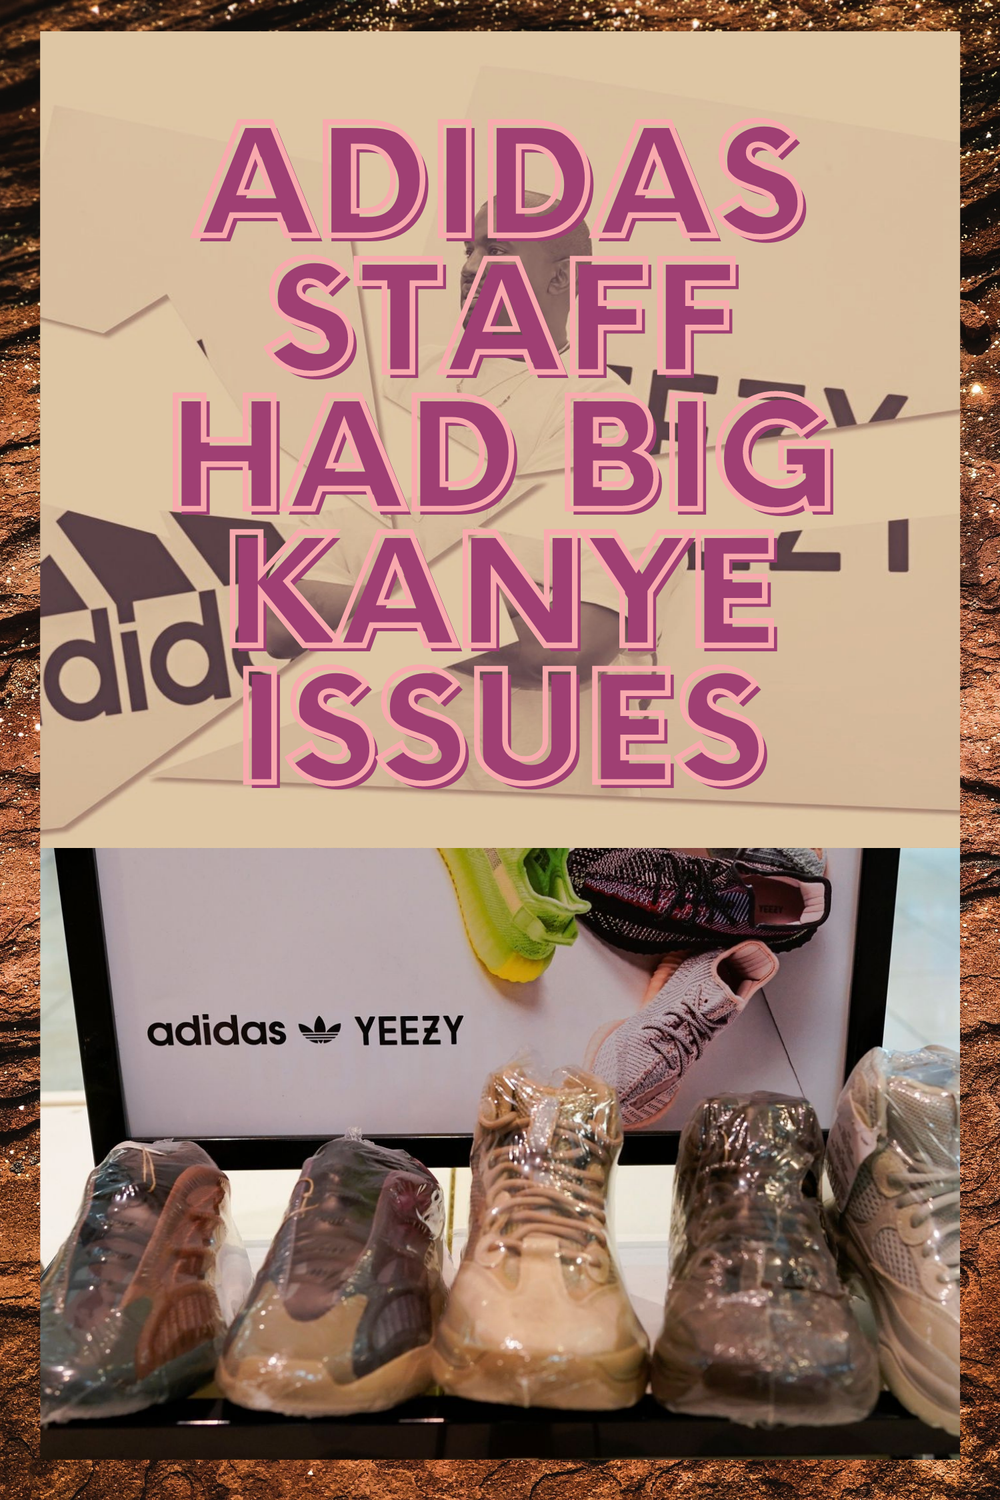 Kanye West's Adidas Partnership Began With Swastika Drawings, Porn